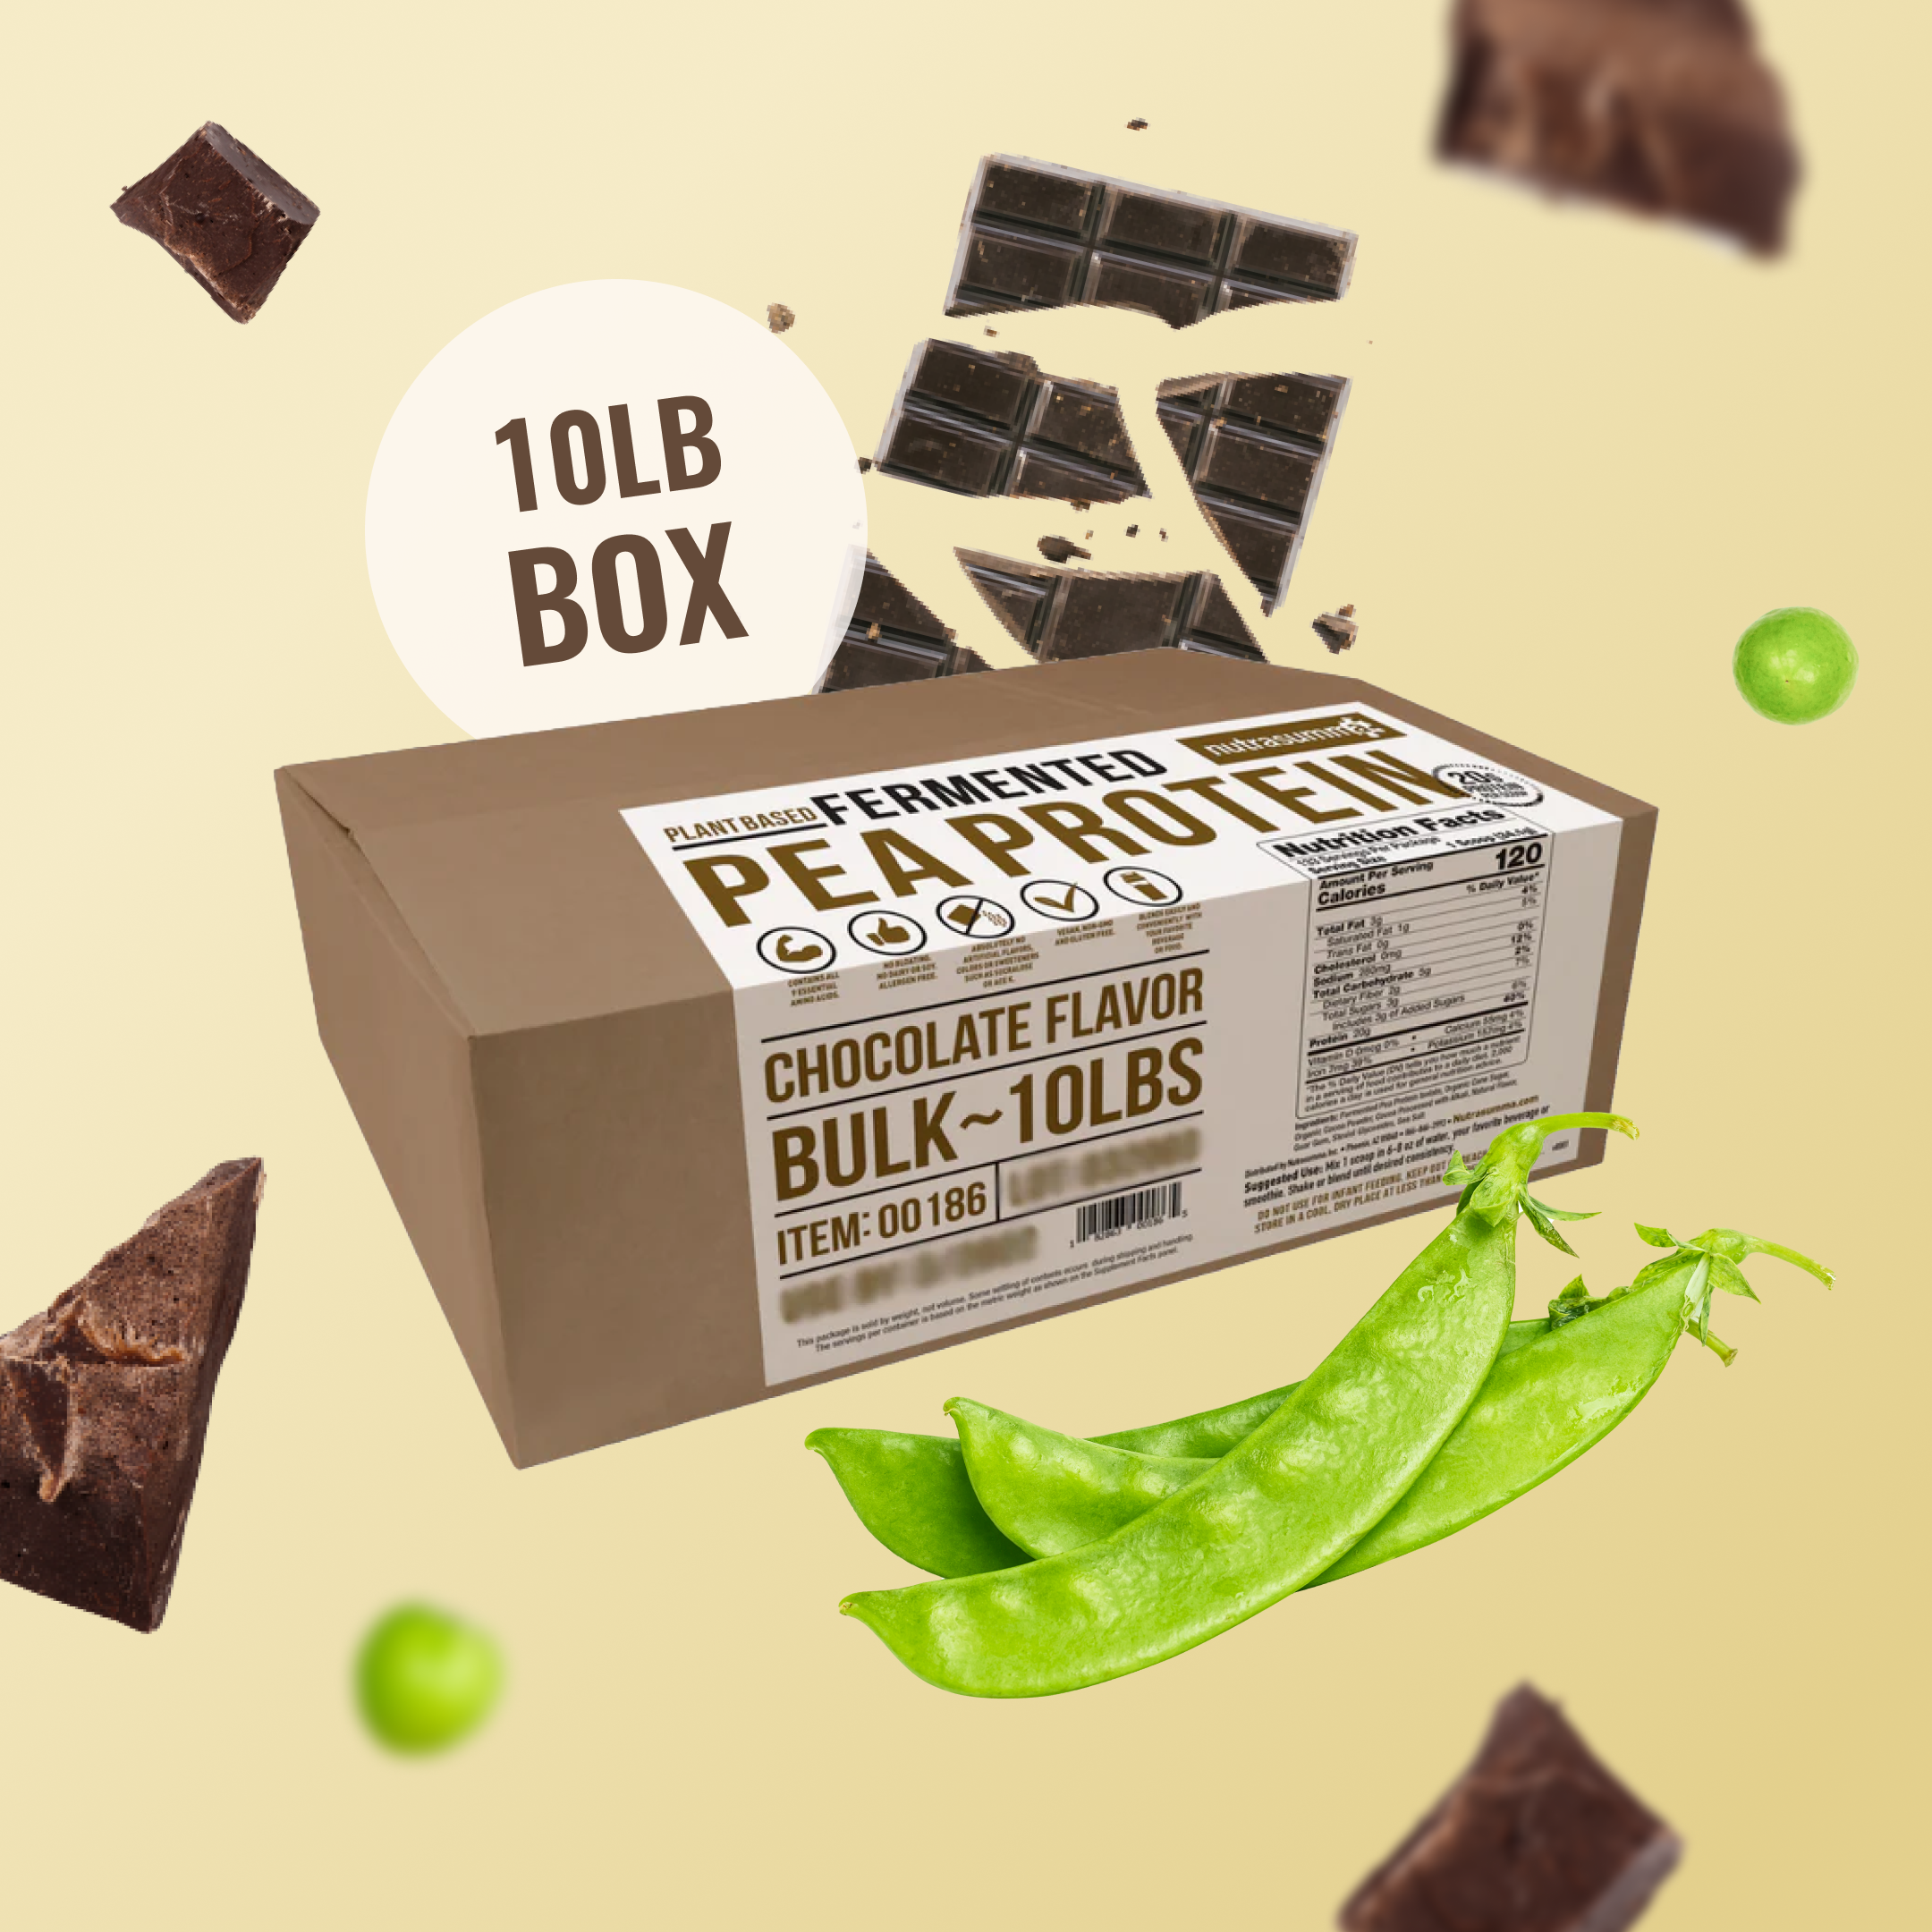 Fermented Pea Protein 10lb Box - Chocolate Flavor